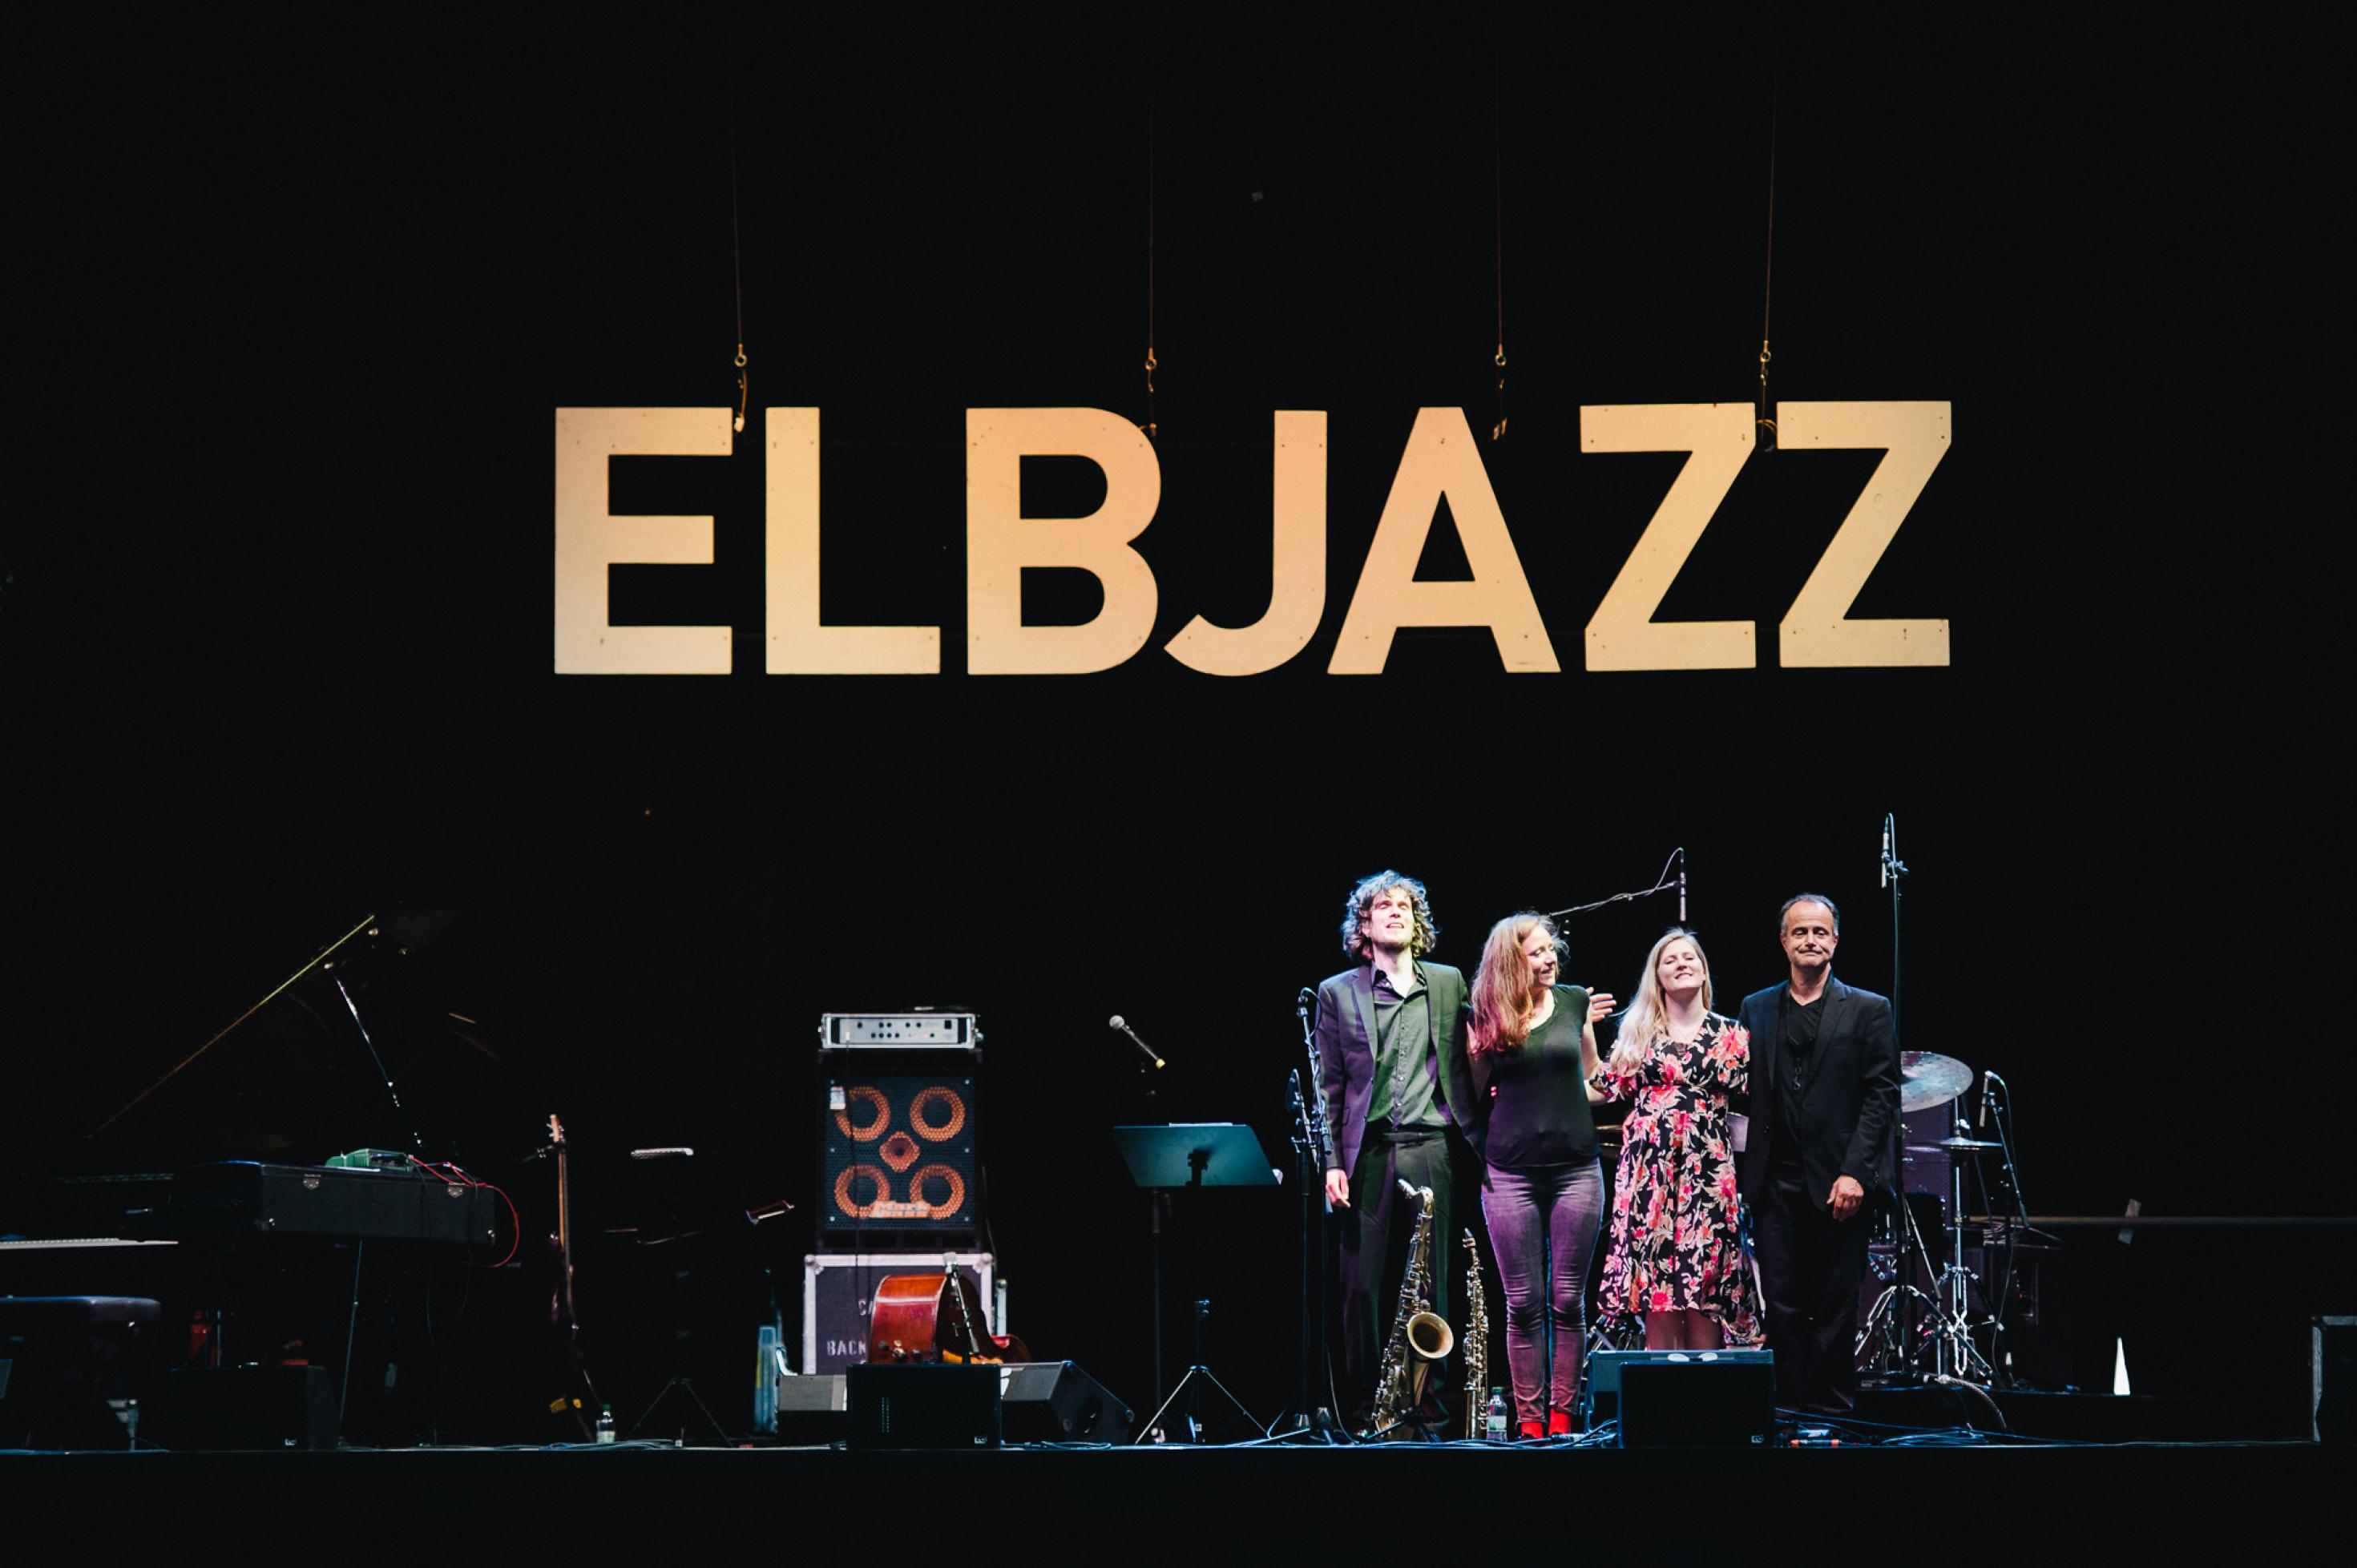 Lisa Wulff, Hamburger Jazzpreis 2019, mit Band: Benjamin Schaefer, Christin Neddens, Lisa Wulff, Gabriel Coburger (von links nach rechts).